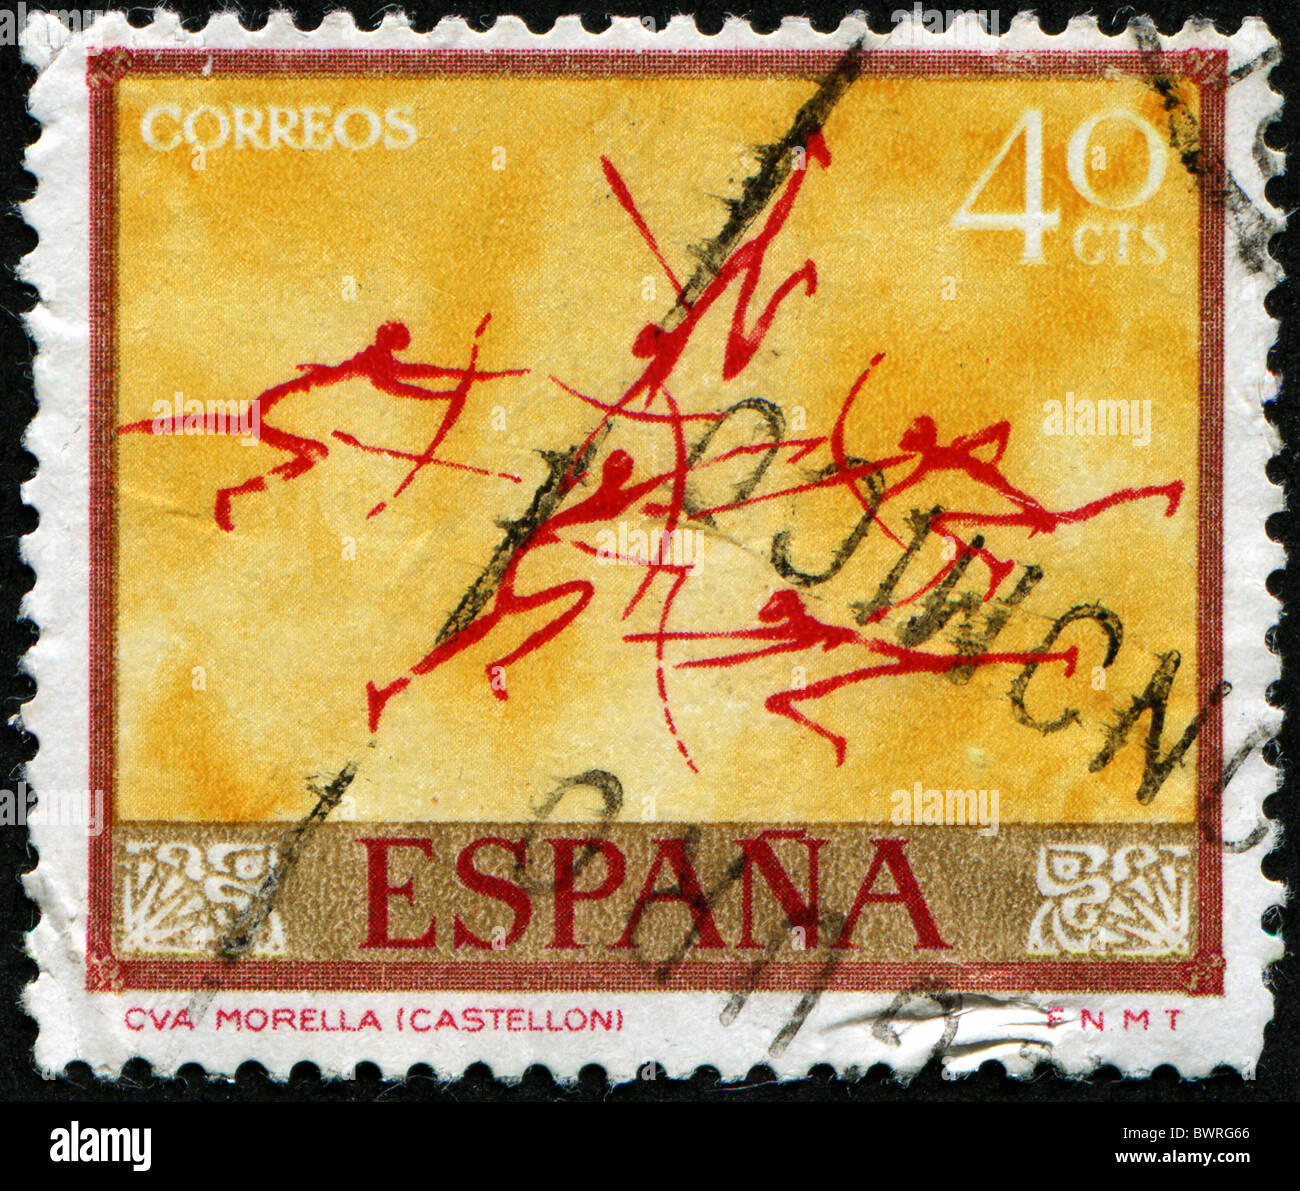 SPAIN - CIRCA 1974: A stamp printed in Spain shows prehistoric art in Morella - Castellon, circa 1974 Stock Photo